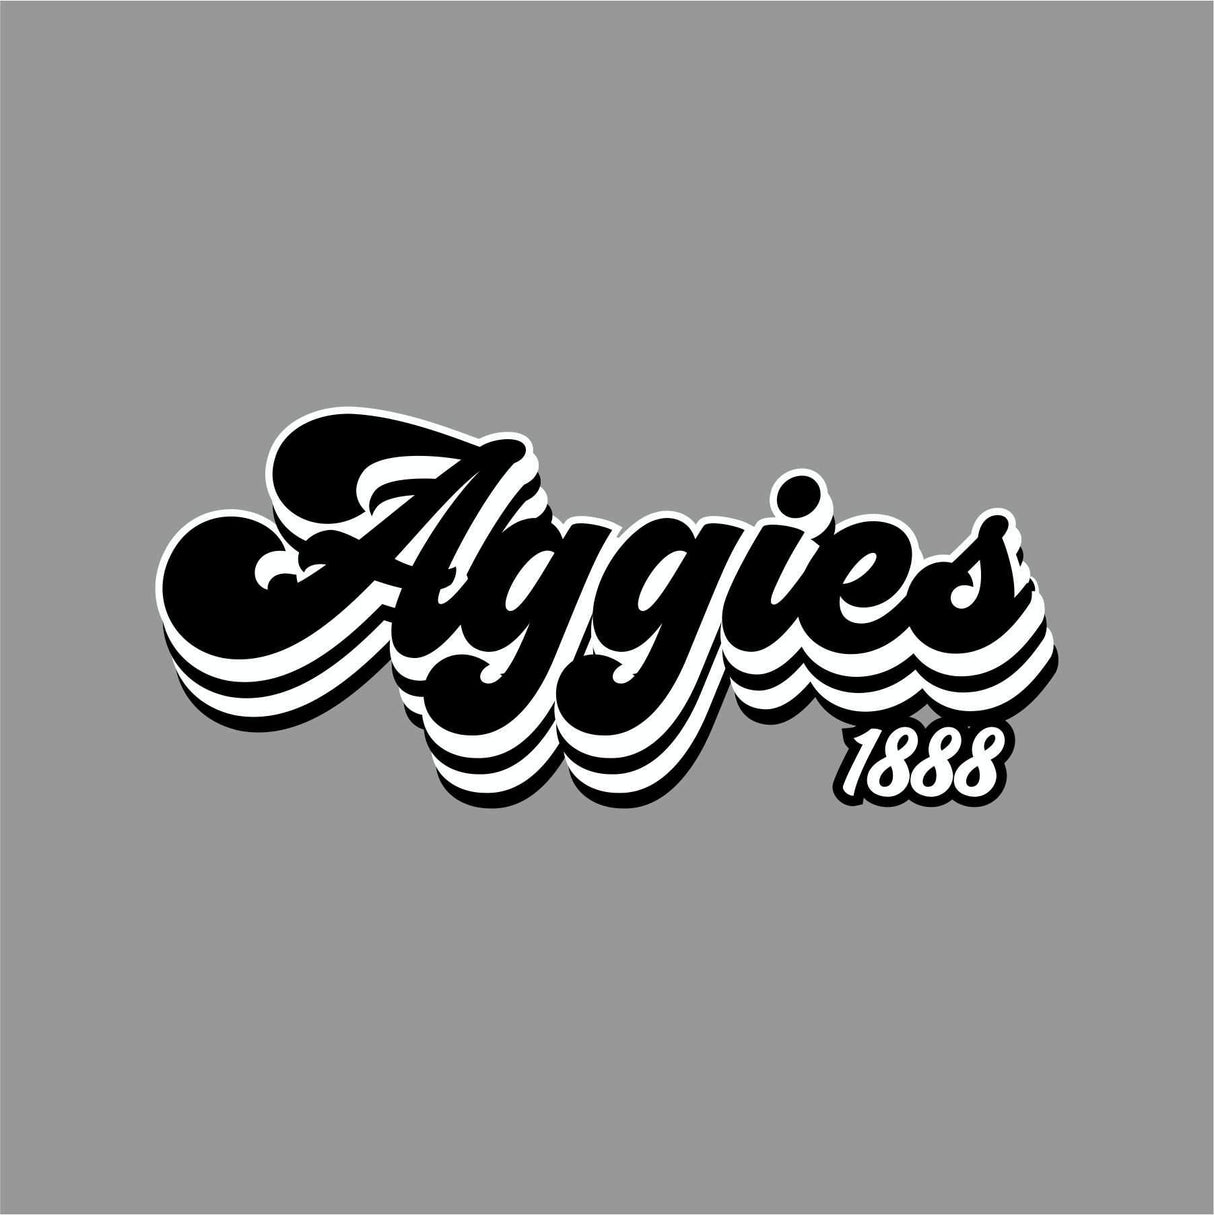 Aggies 1888 Decal